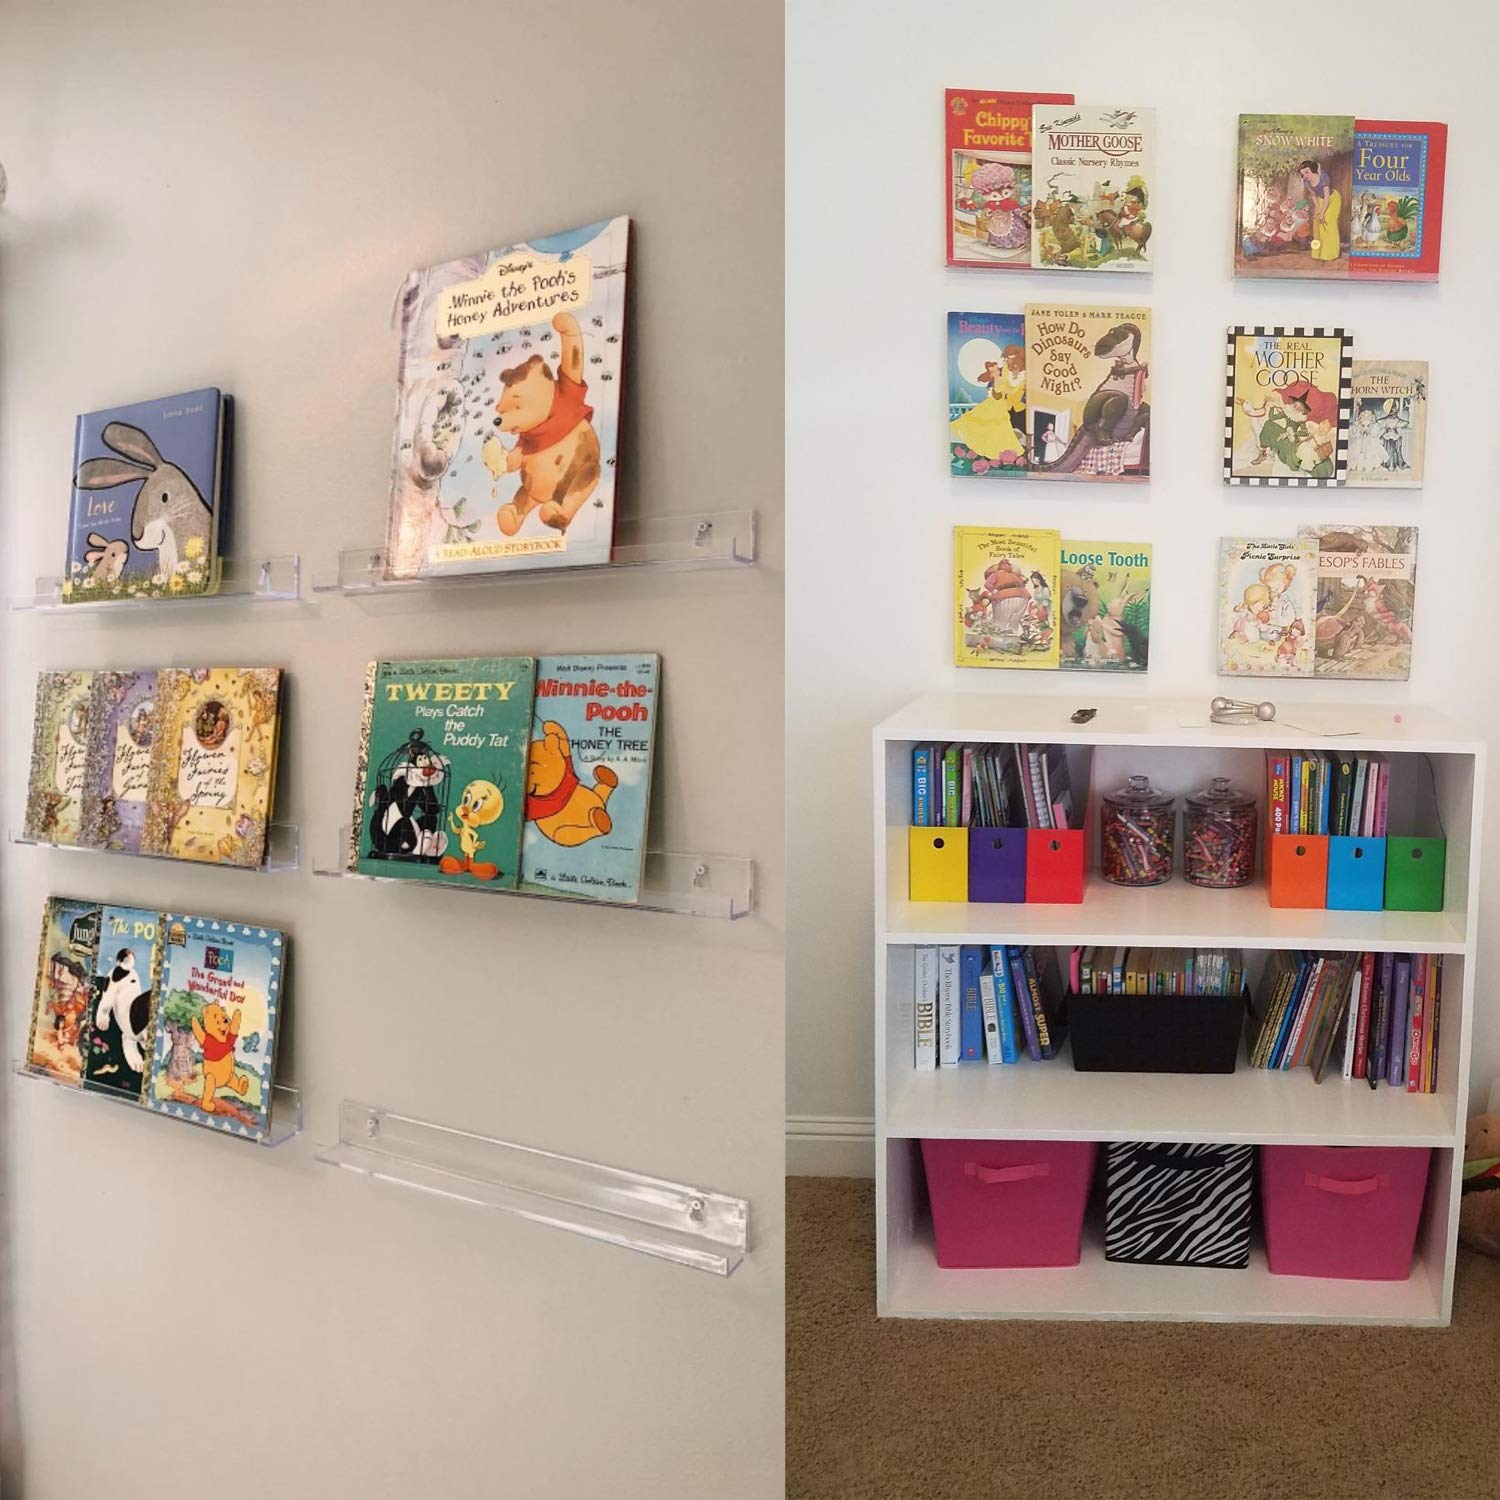 Acrylic Invisible Kids Floating Bookshelf Picture Storage Bedroom Decor